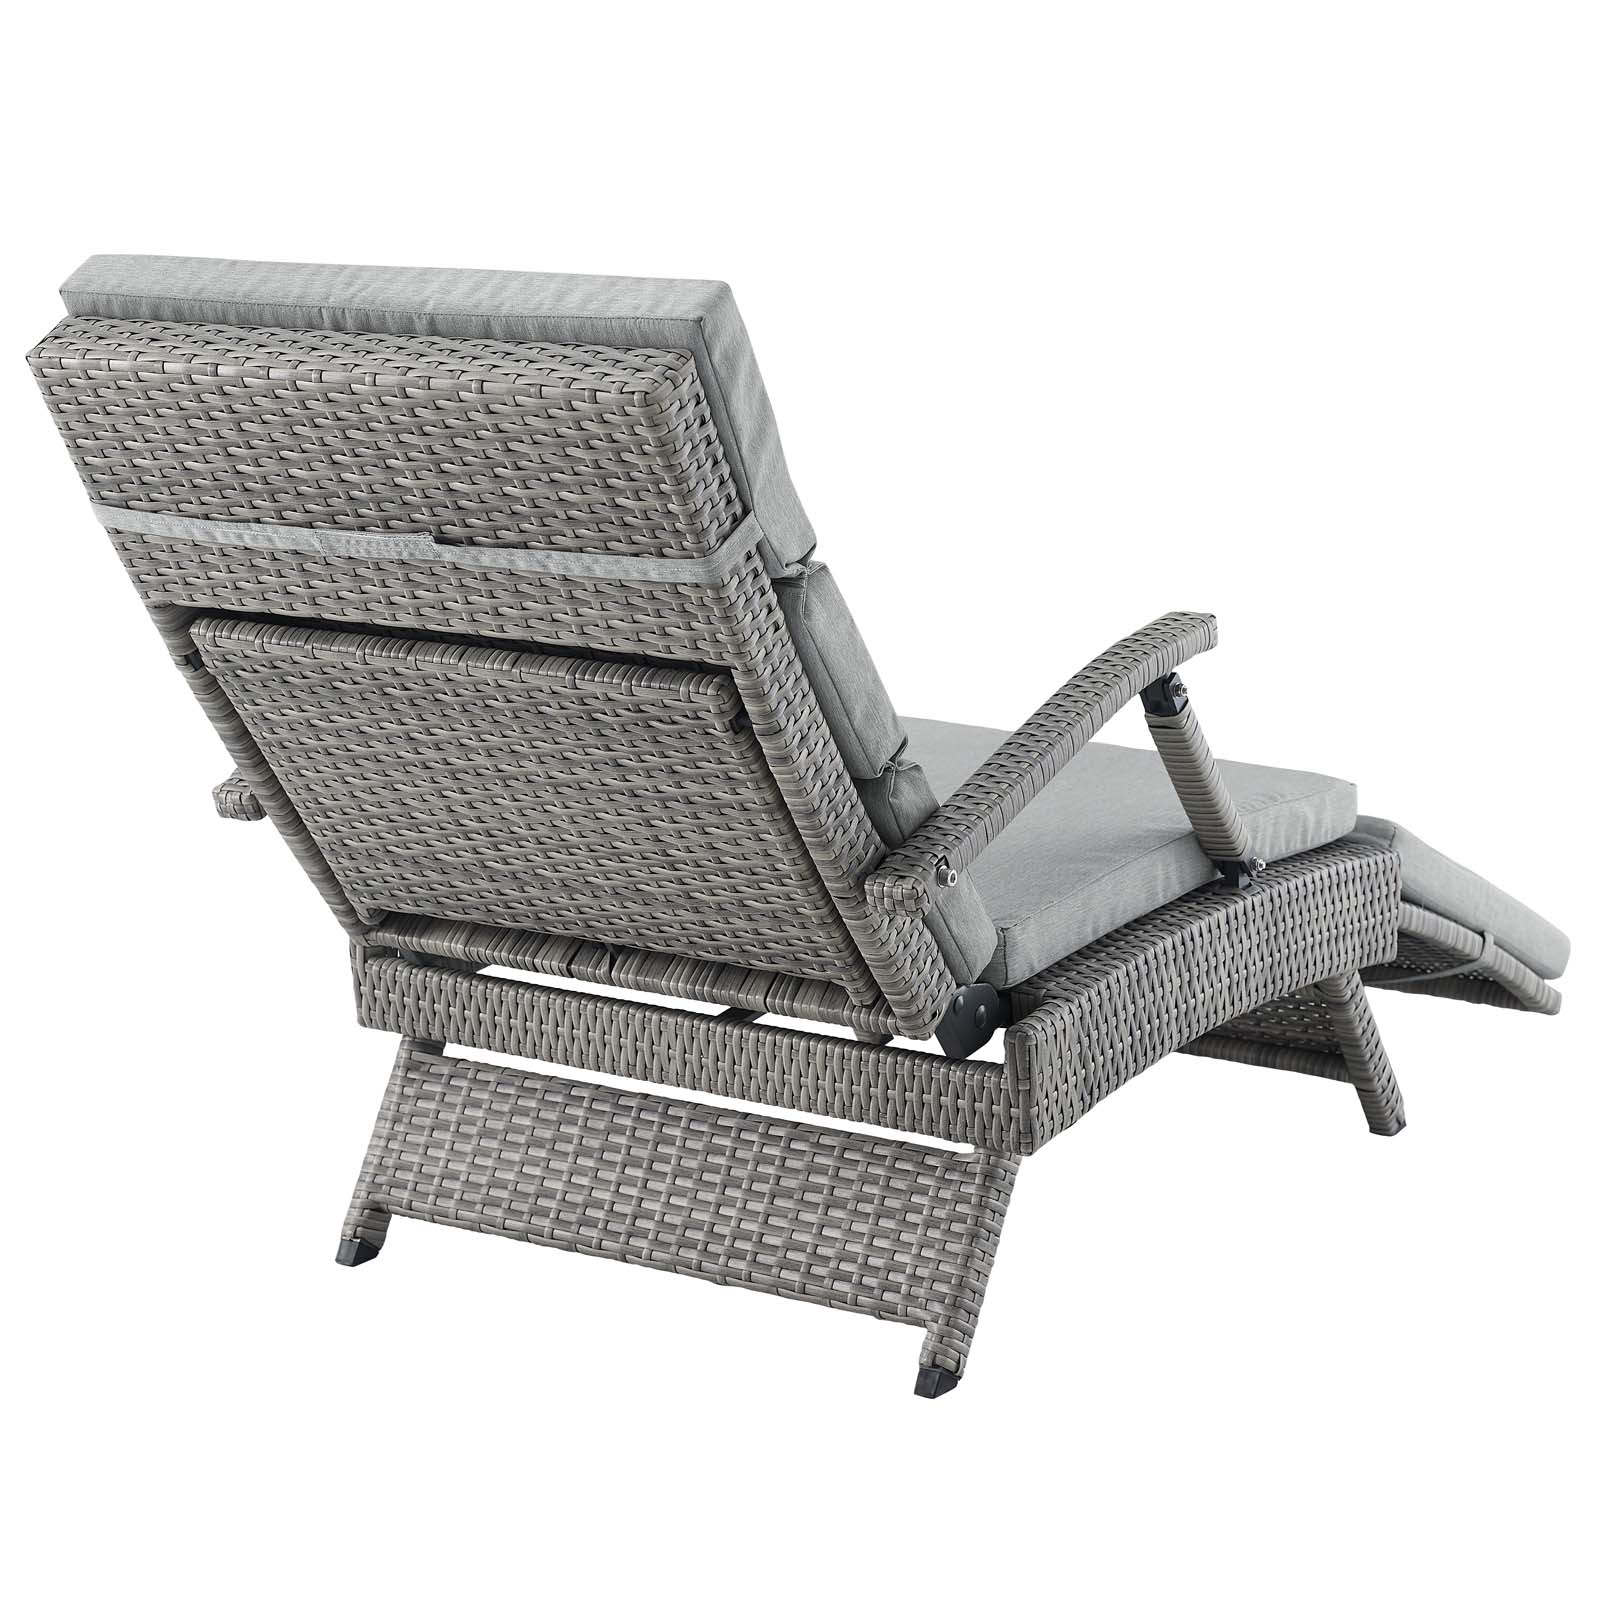 Modern Contemporary Urban Design Outdoor Patio Balcony Garden Furniture Lounge Chair Chaise, Rattan Wicker, Grey Gray - image 4 of 8